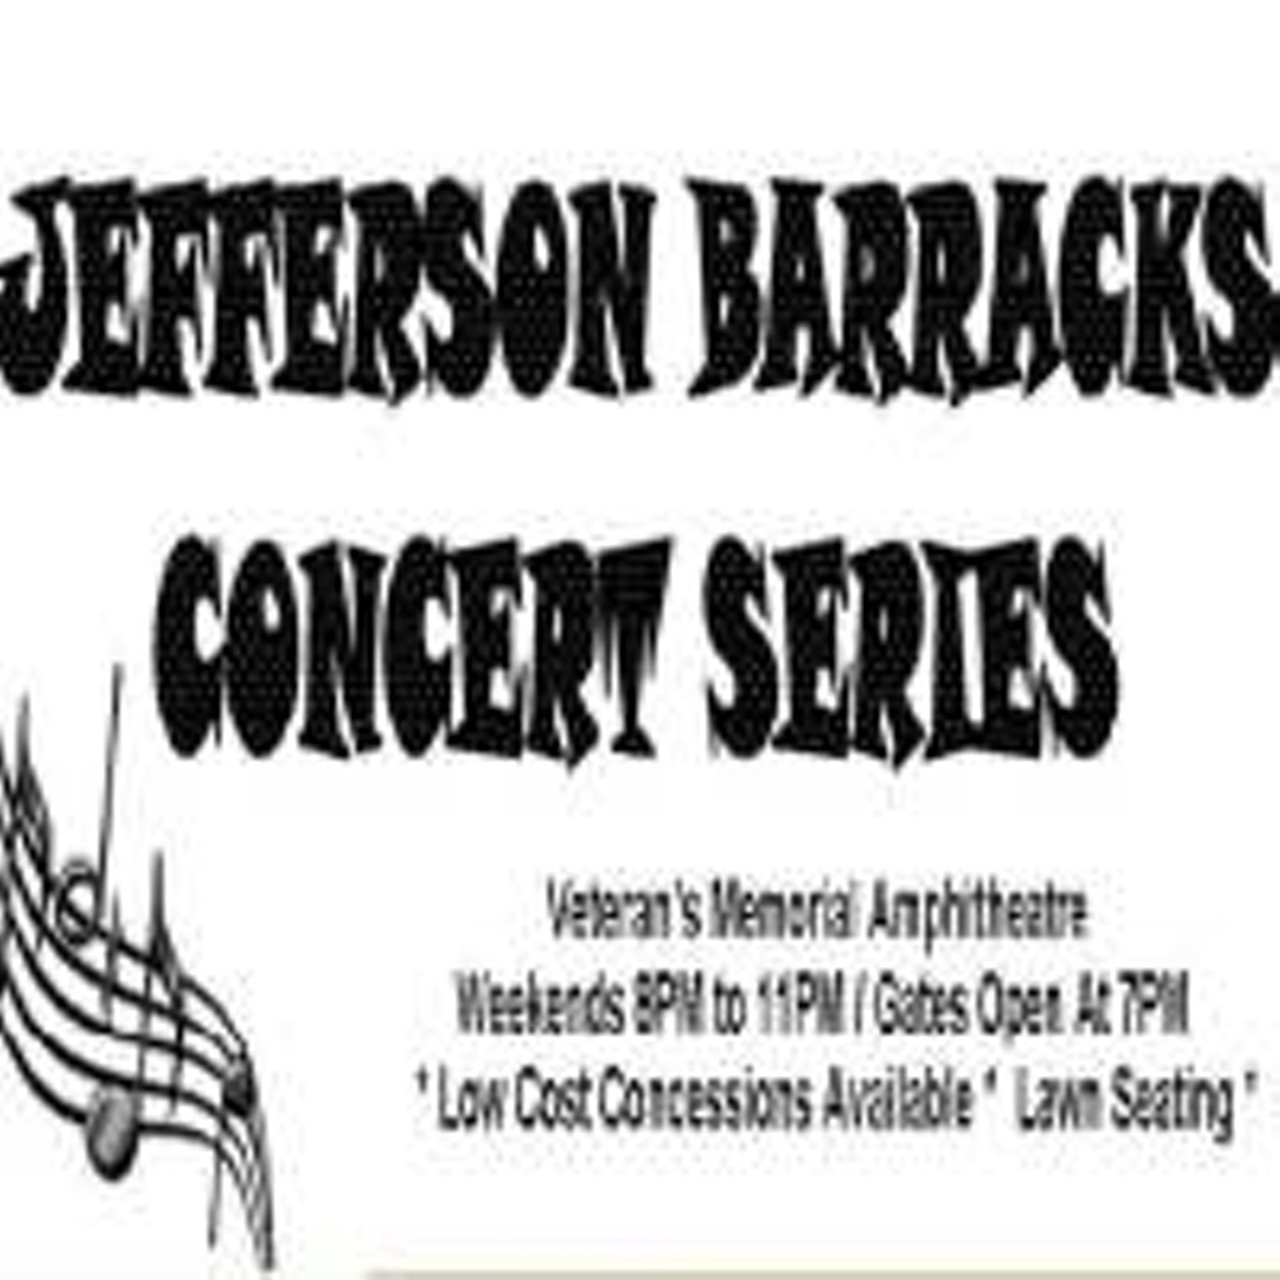 Jefferson Barracks Summer Concert Series St. Louis St. Louis